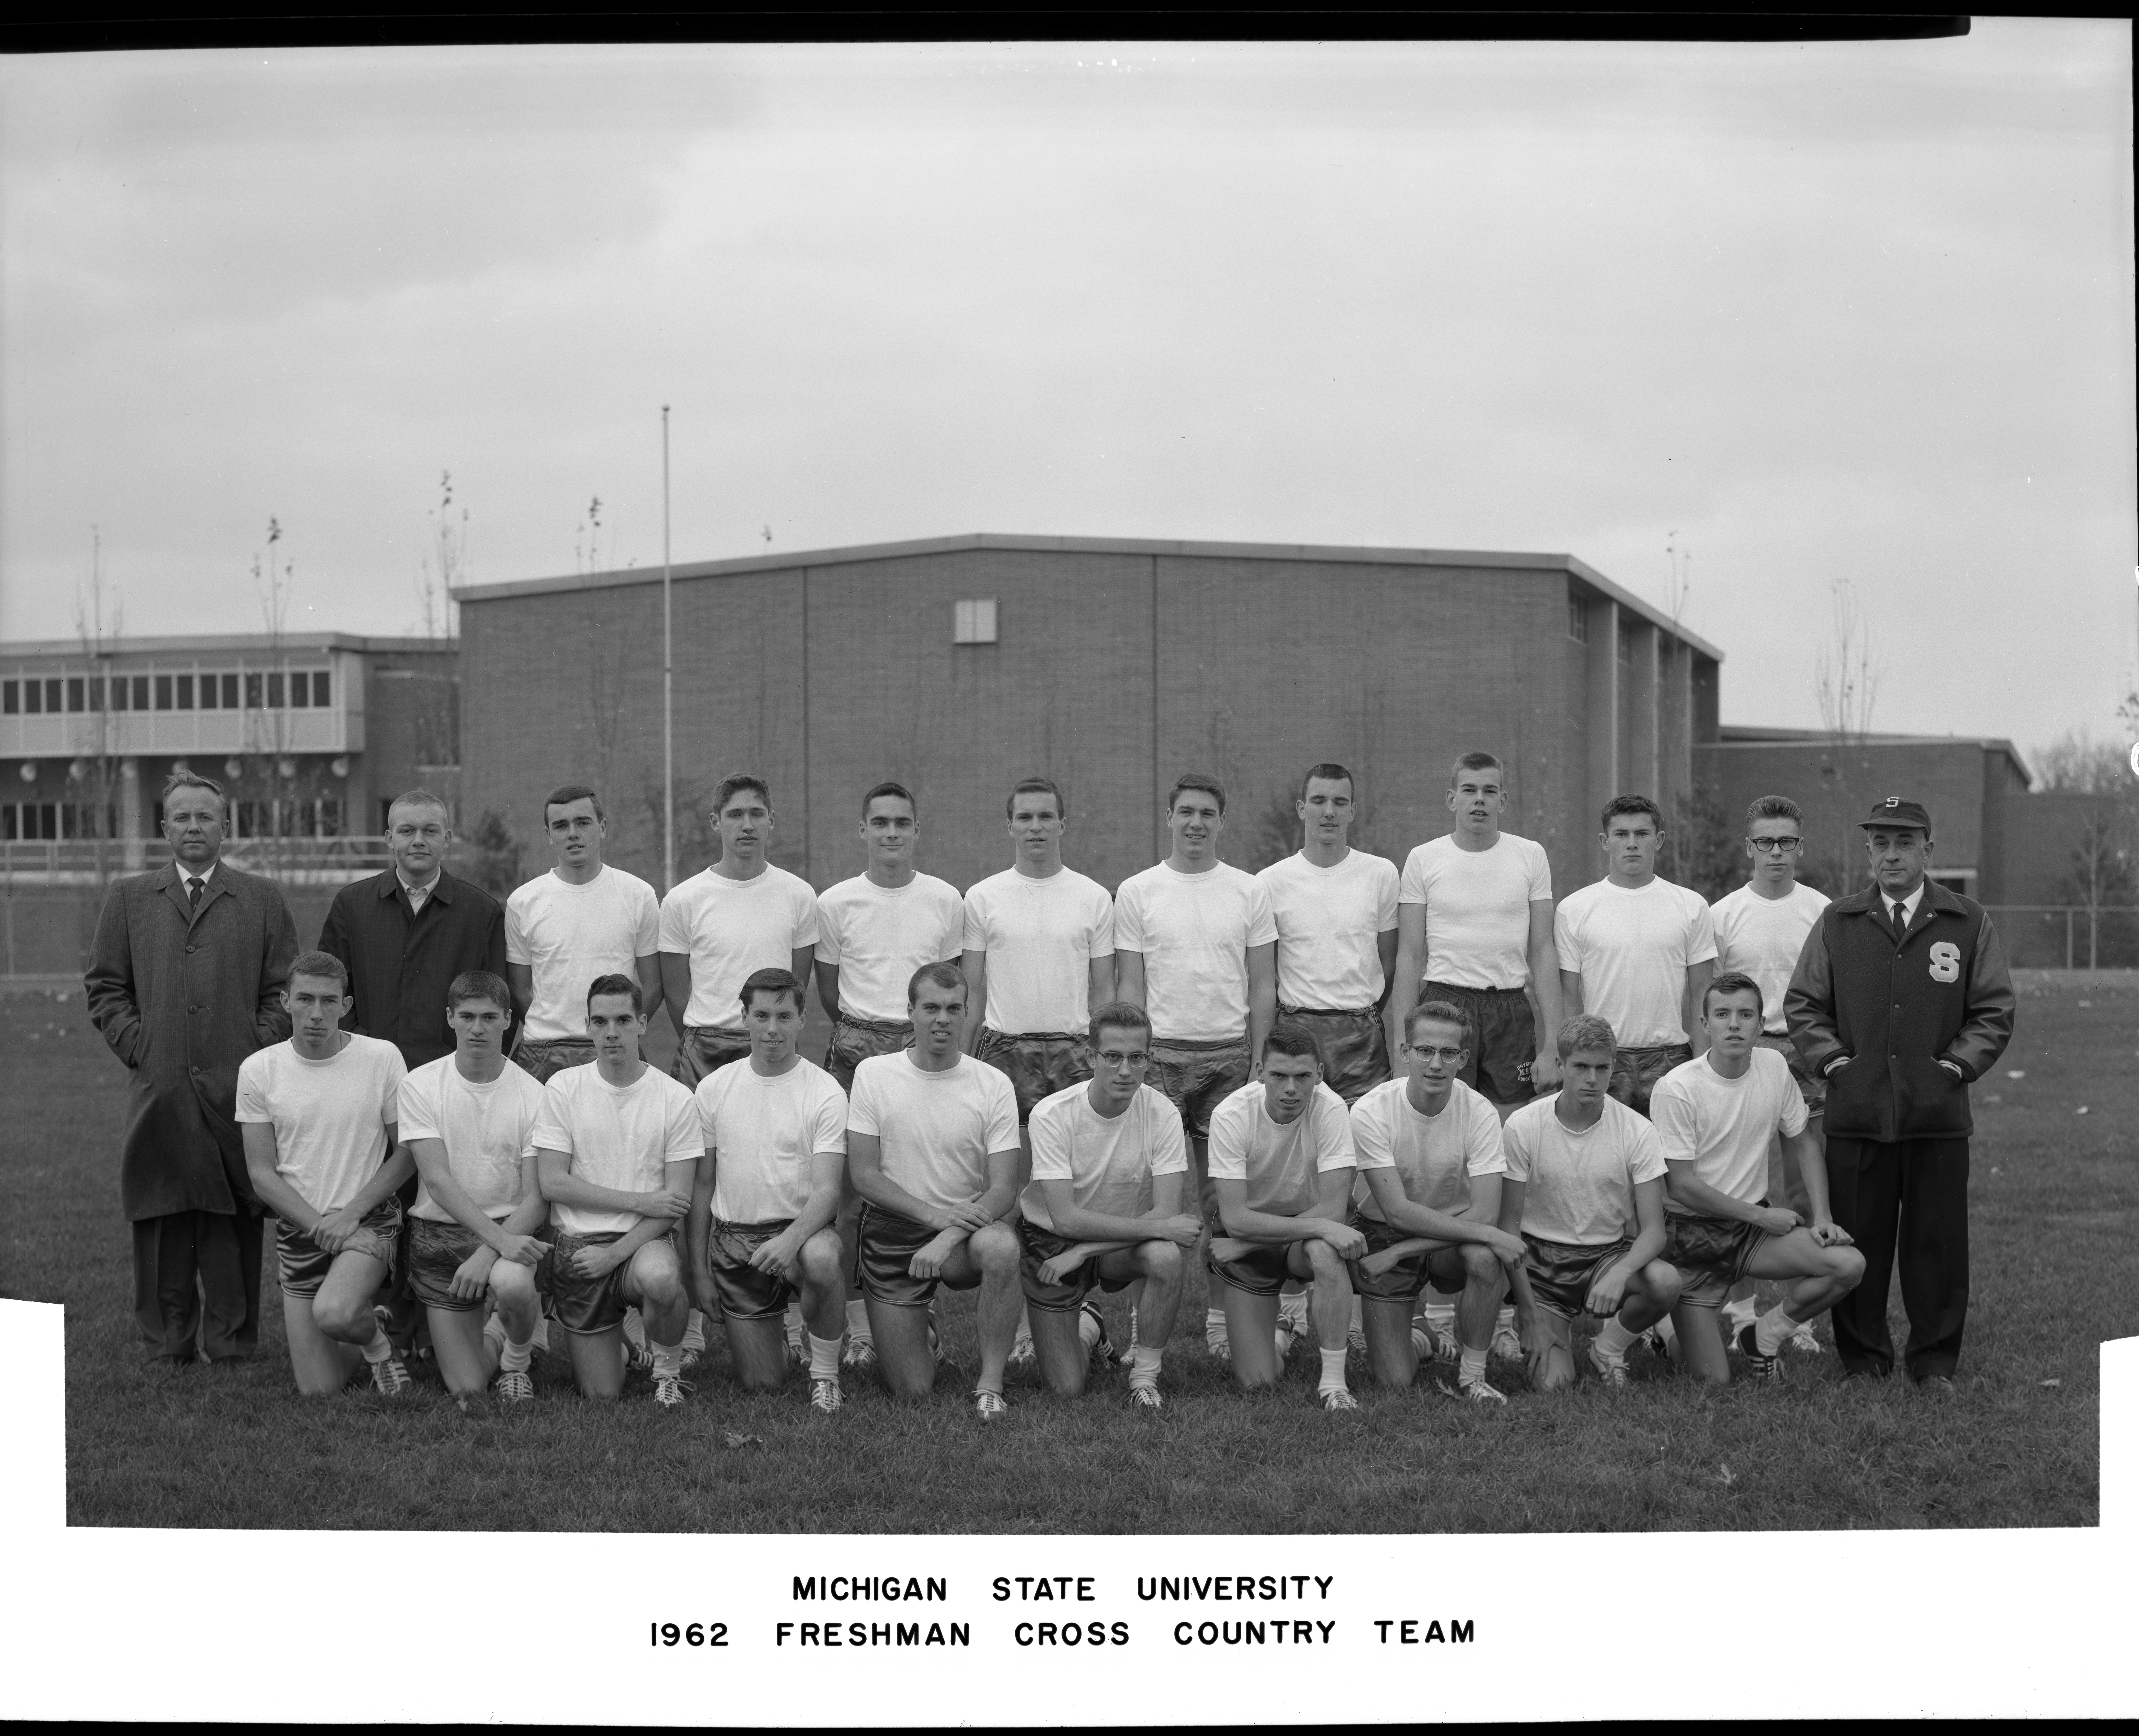 Freshman Cross Country Team Photo, 1962